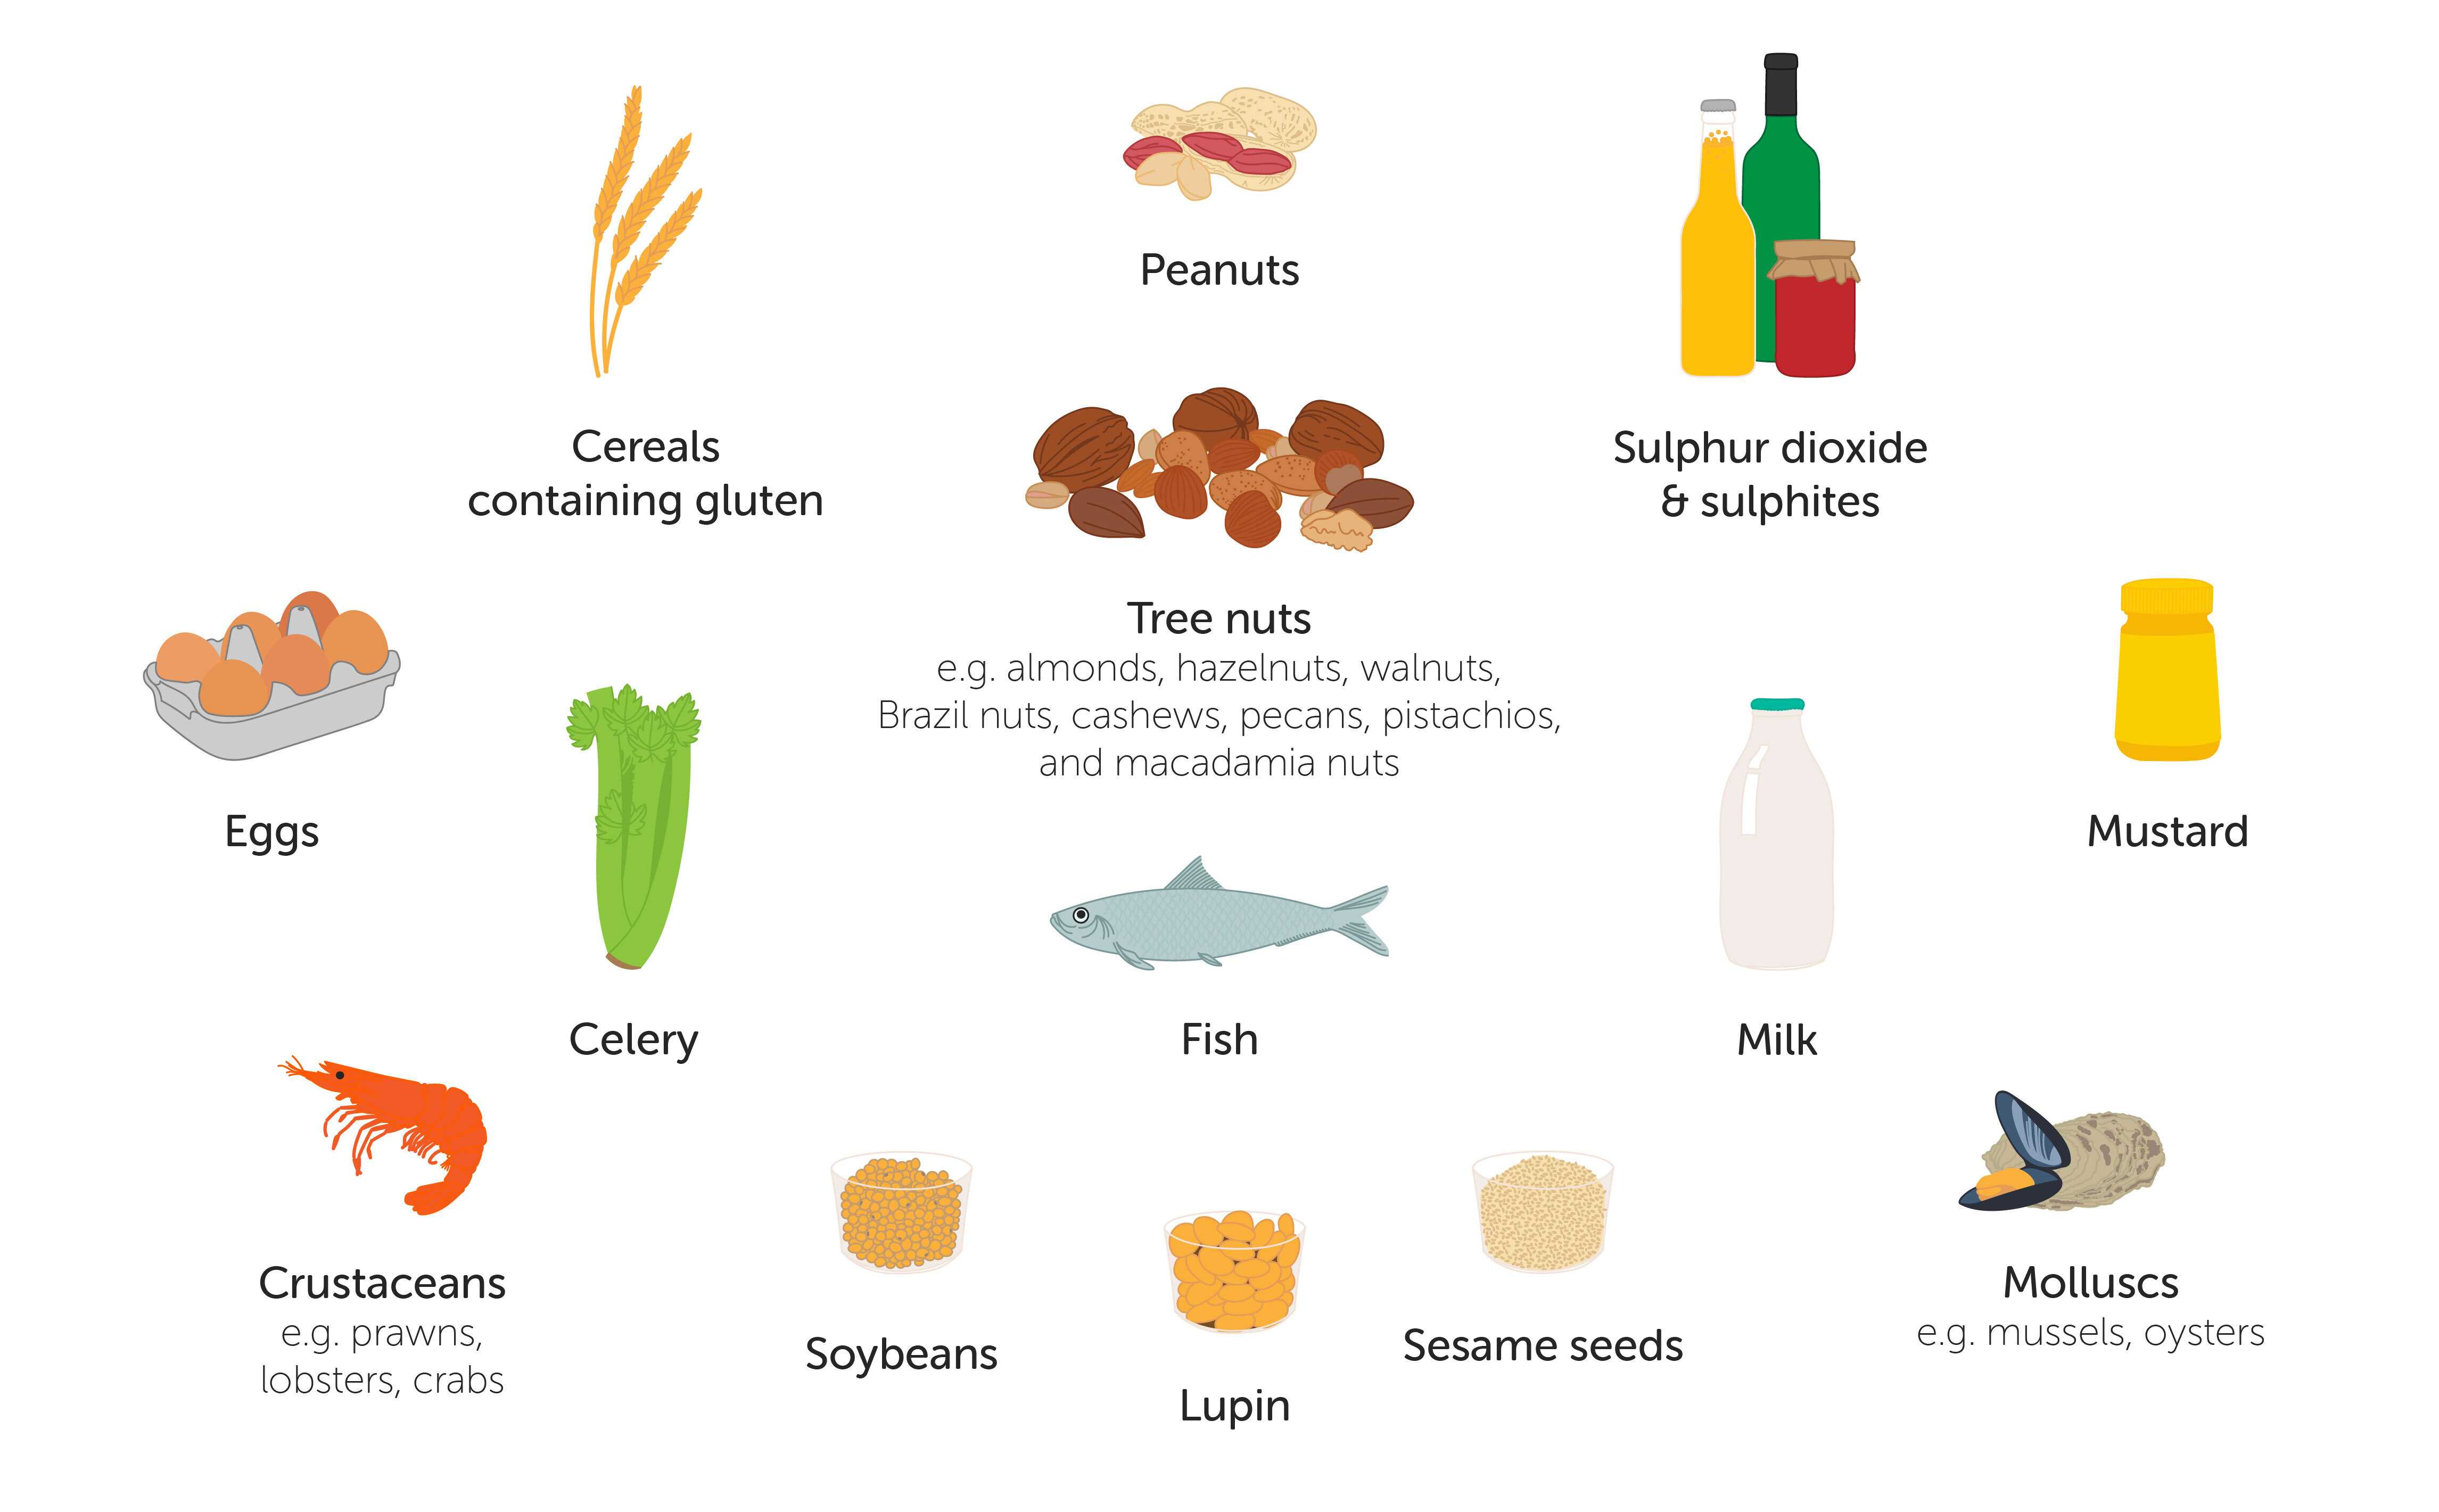 The 14 major food allergens